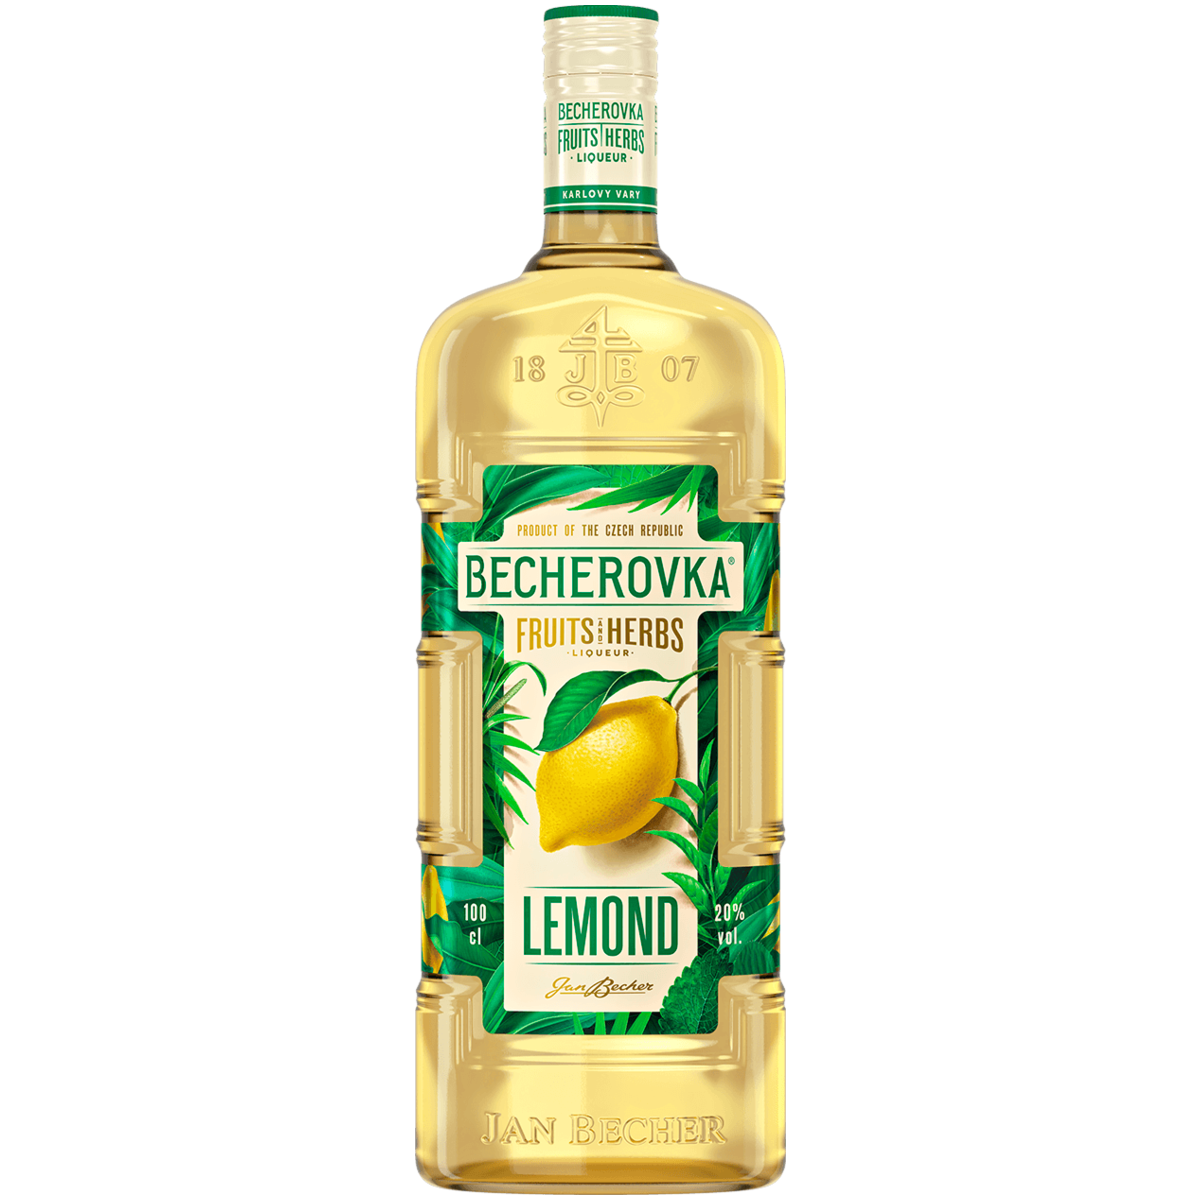 Ликер Becherovka Lemond, 1 л. Ликер Бехеровка Лемонд со вкусом лимона. 1 Л ликер Бехеровка Лемонд 20%. Ликер Becherovka 38 0.5л Чехия. Ликер казань